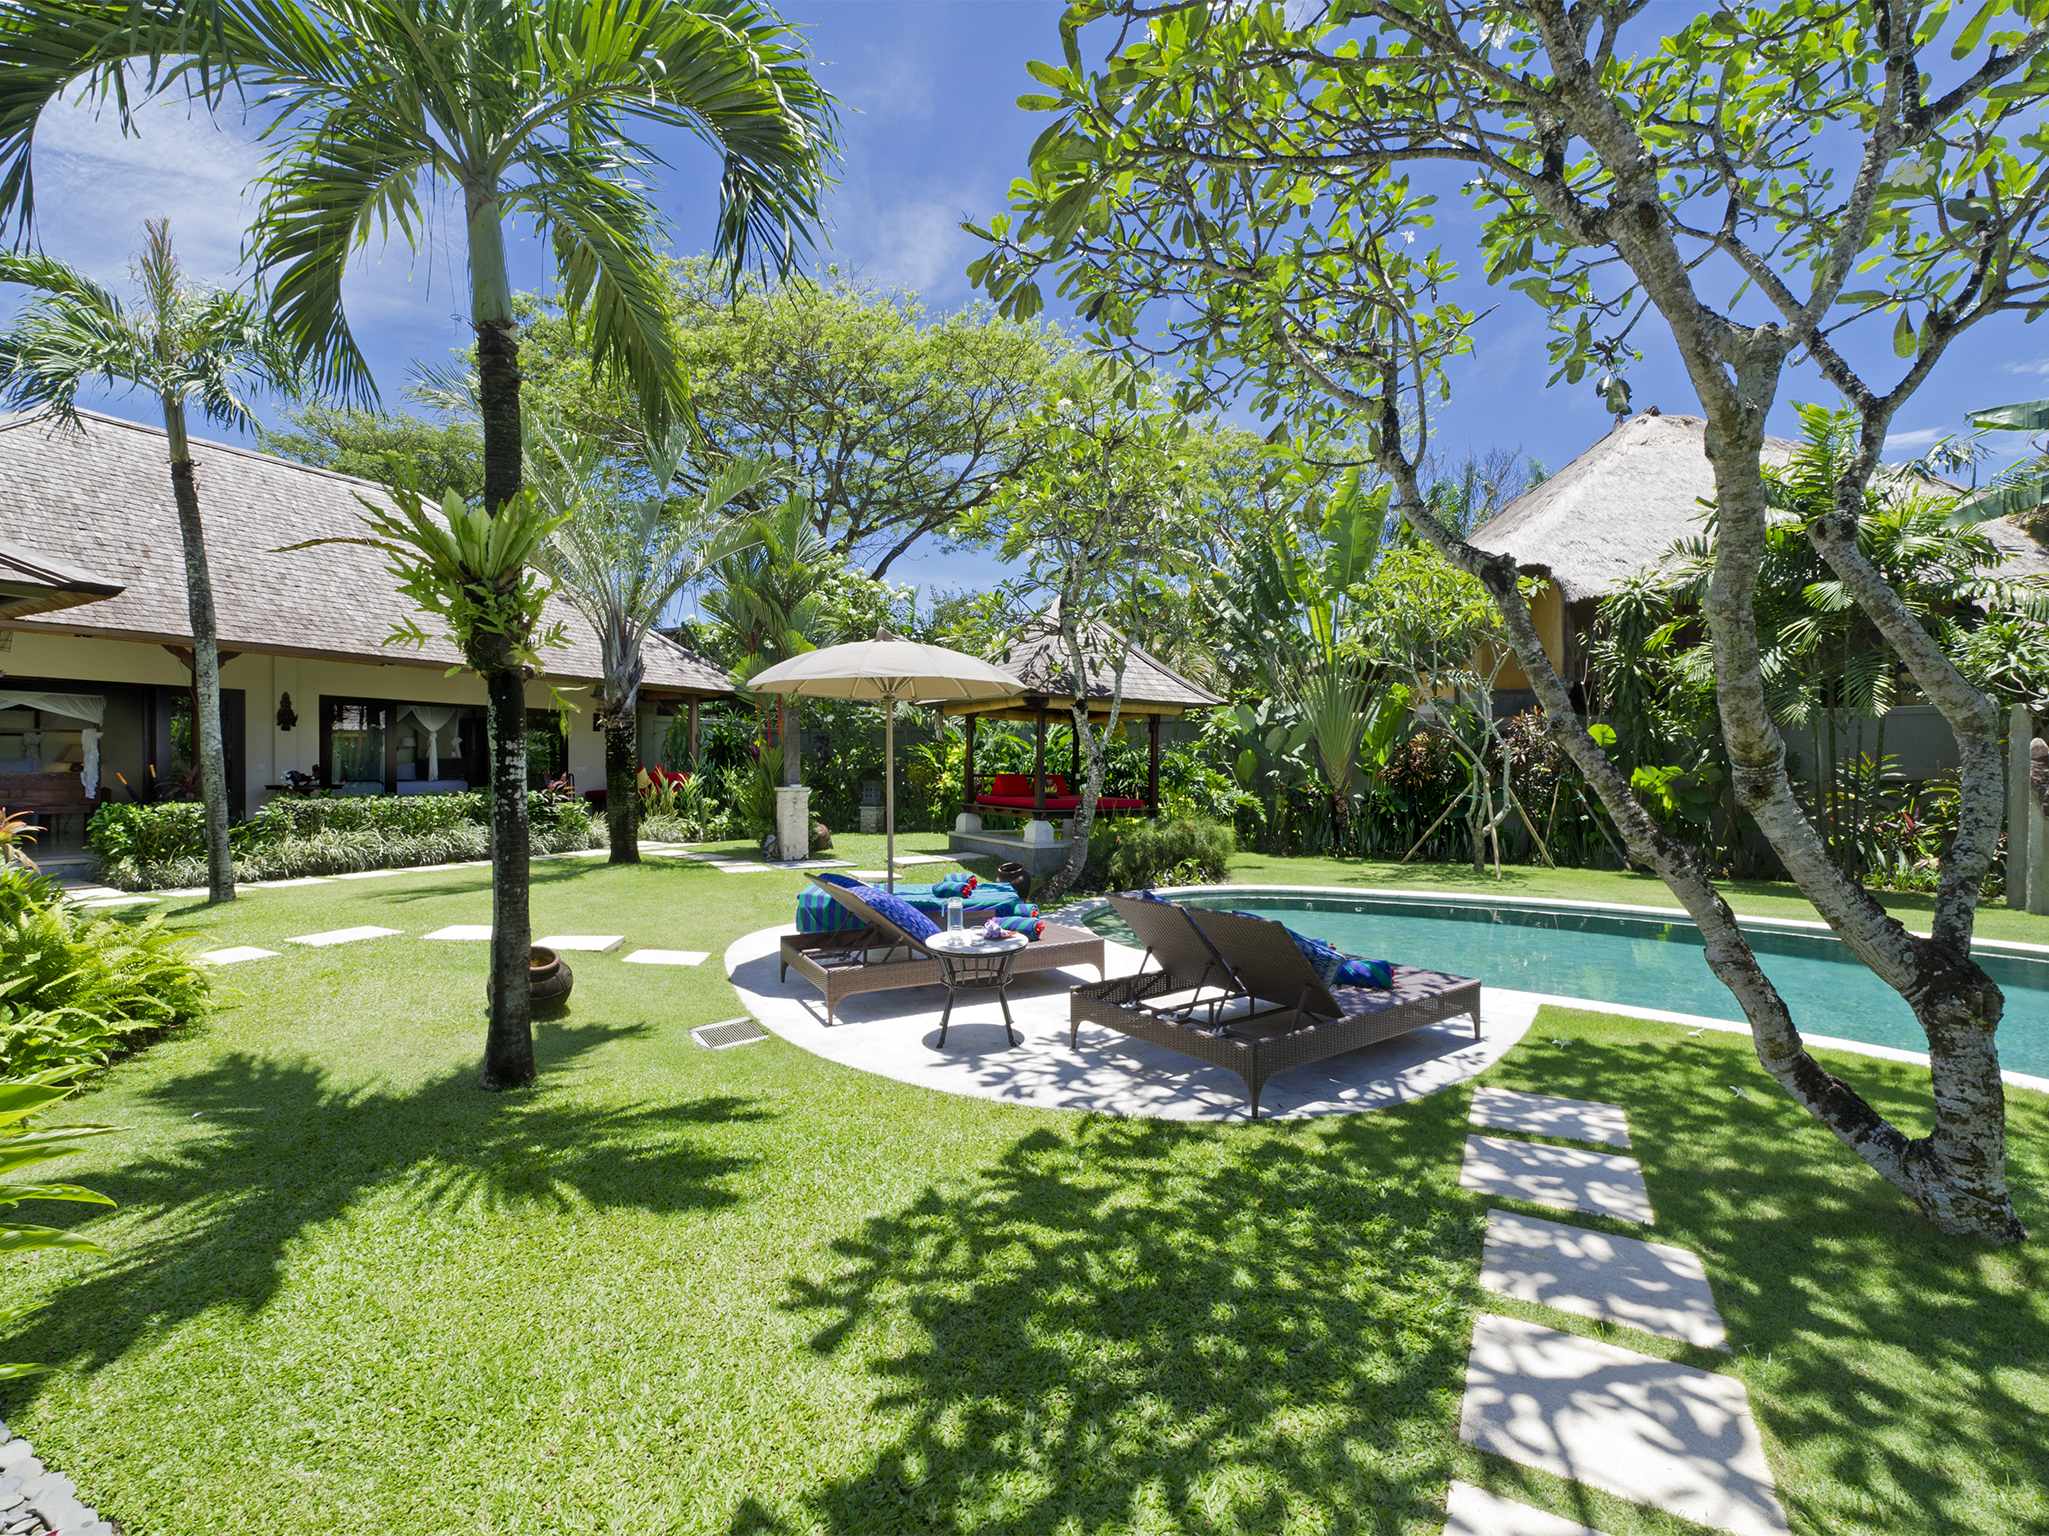 Villa Kakatua - Sun loungers by the pool - Villa Kakatua, Canggu, Bali